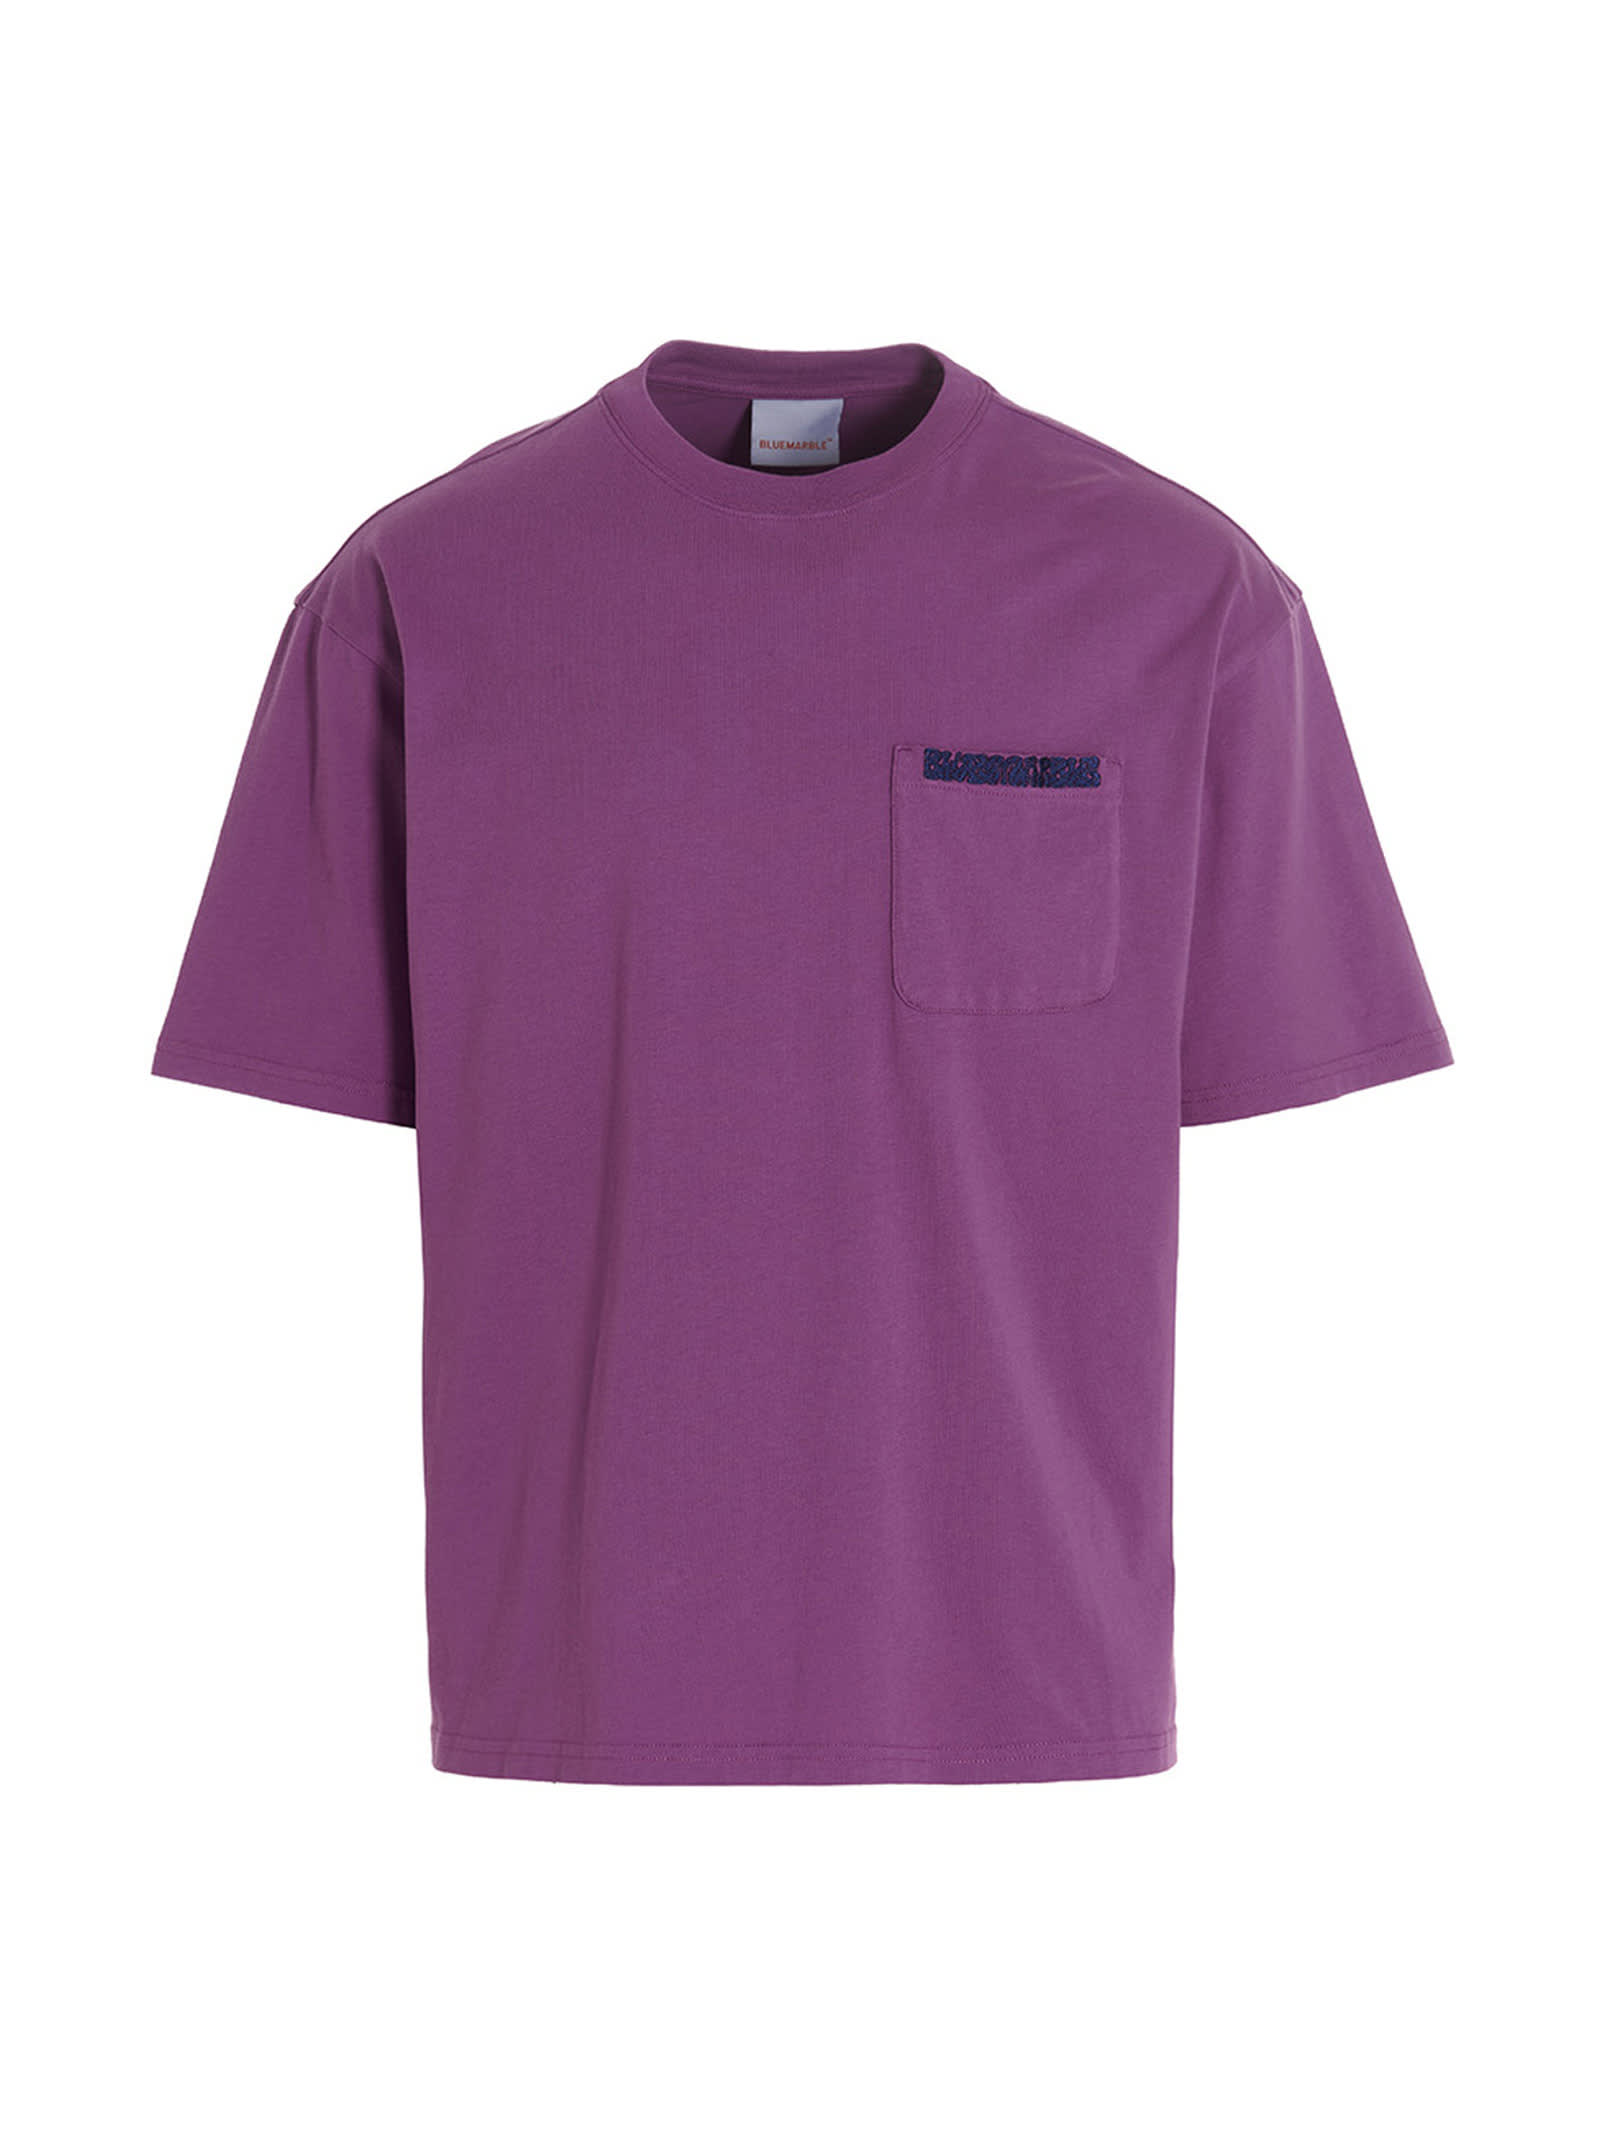 Bluemarble T-shirt mauve Pocket